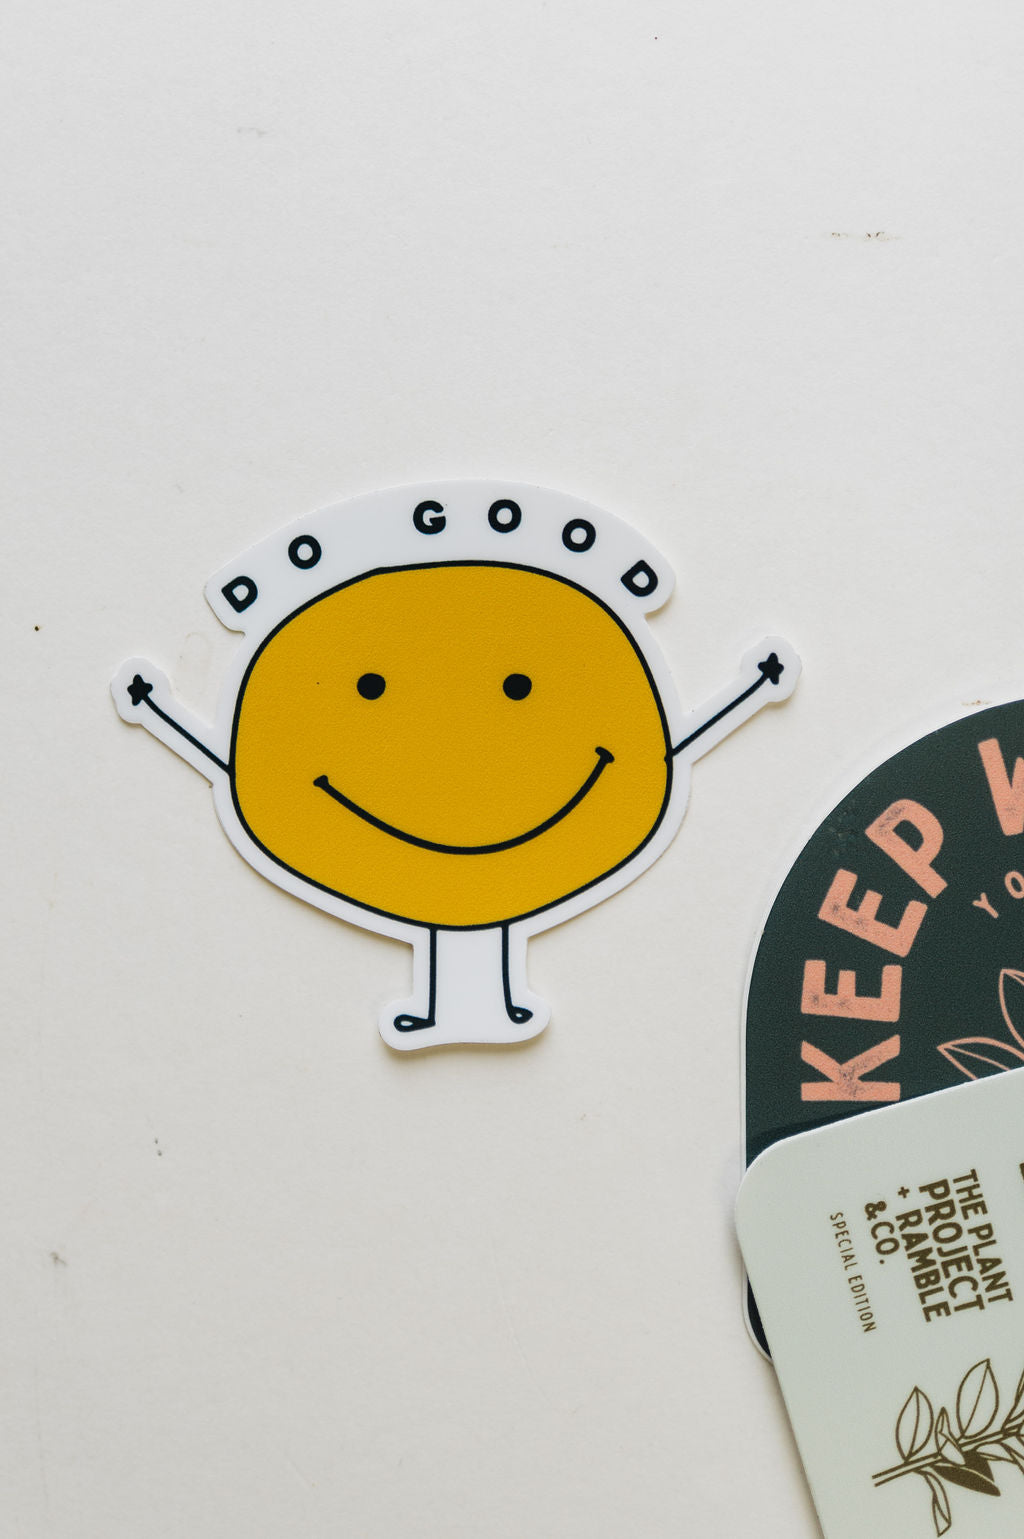 do good | sticker